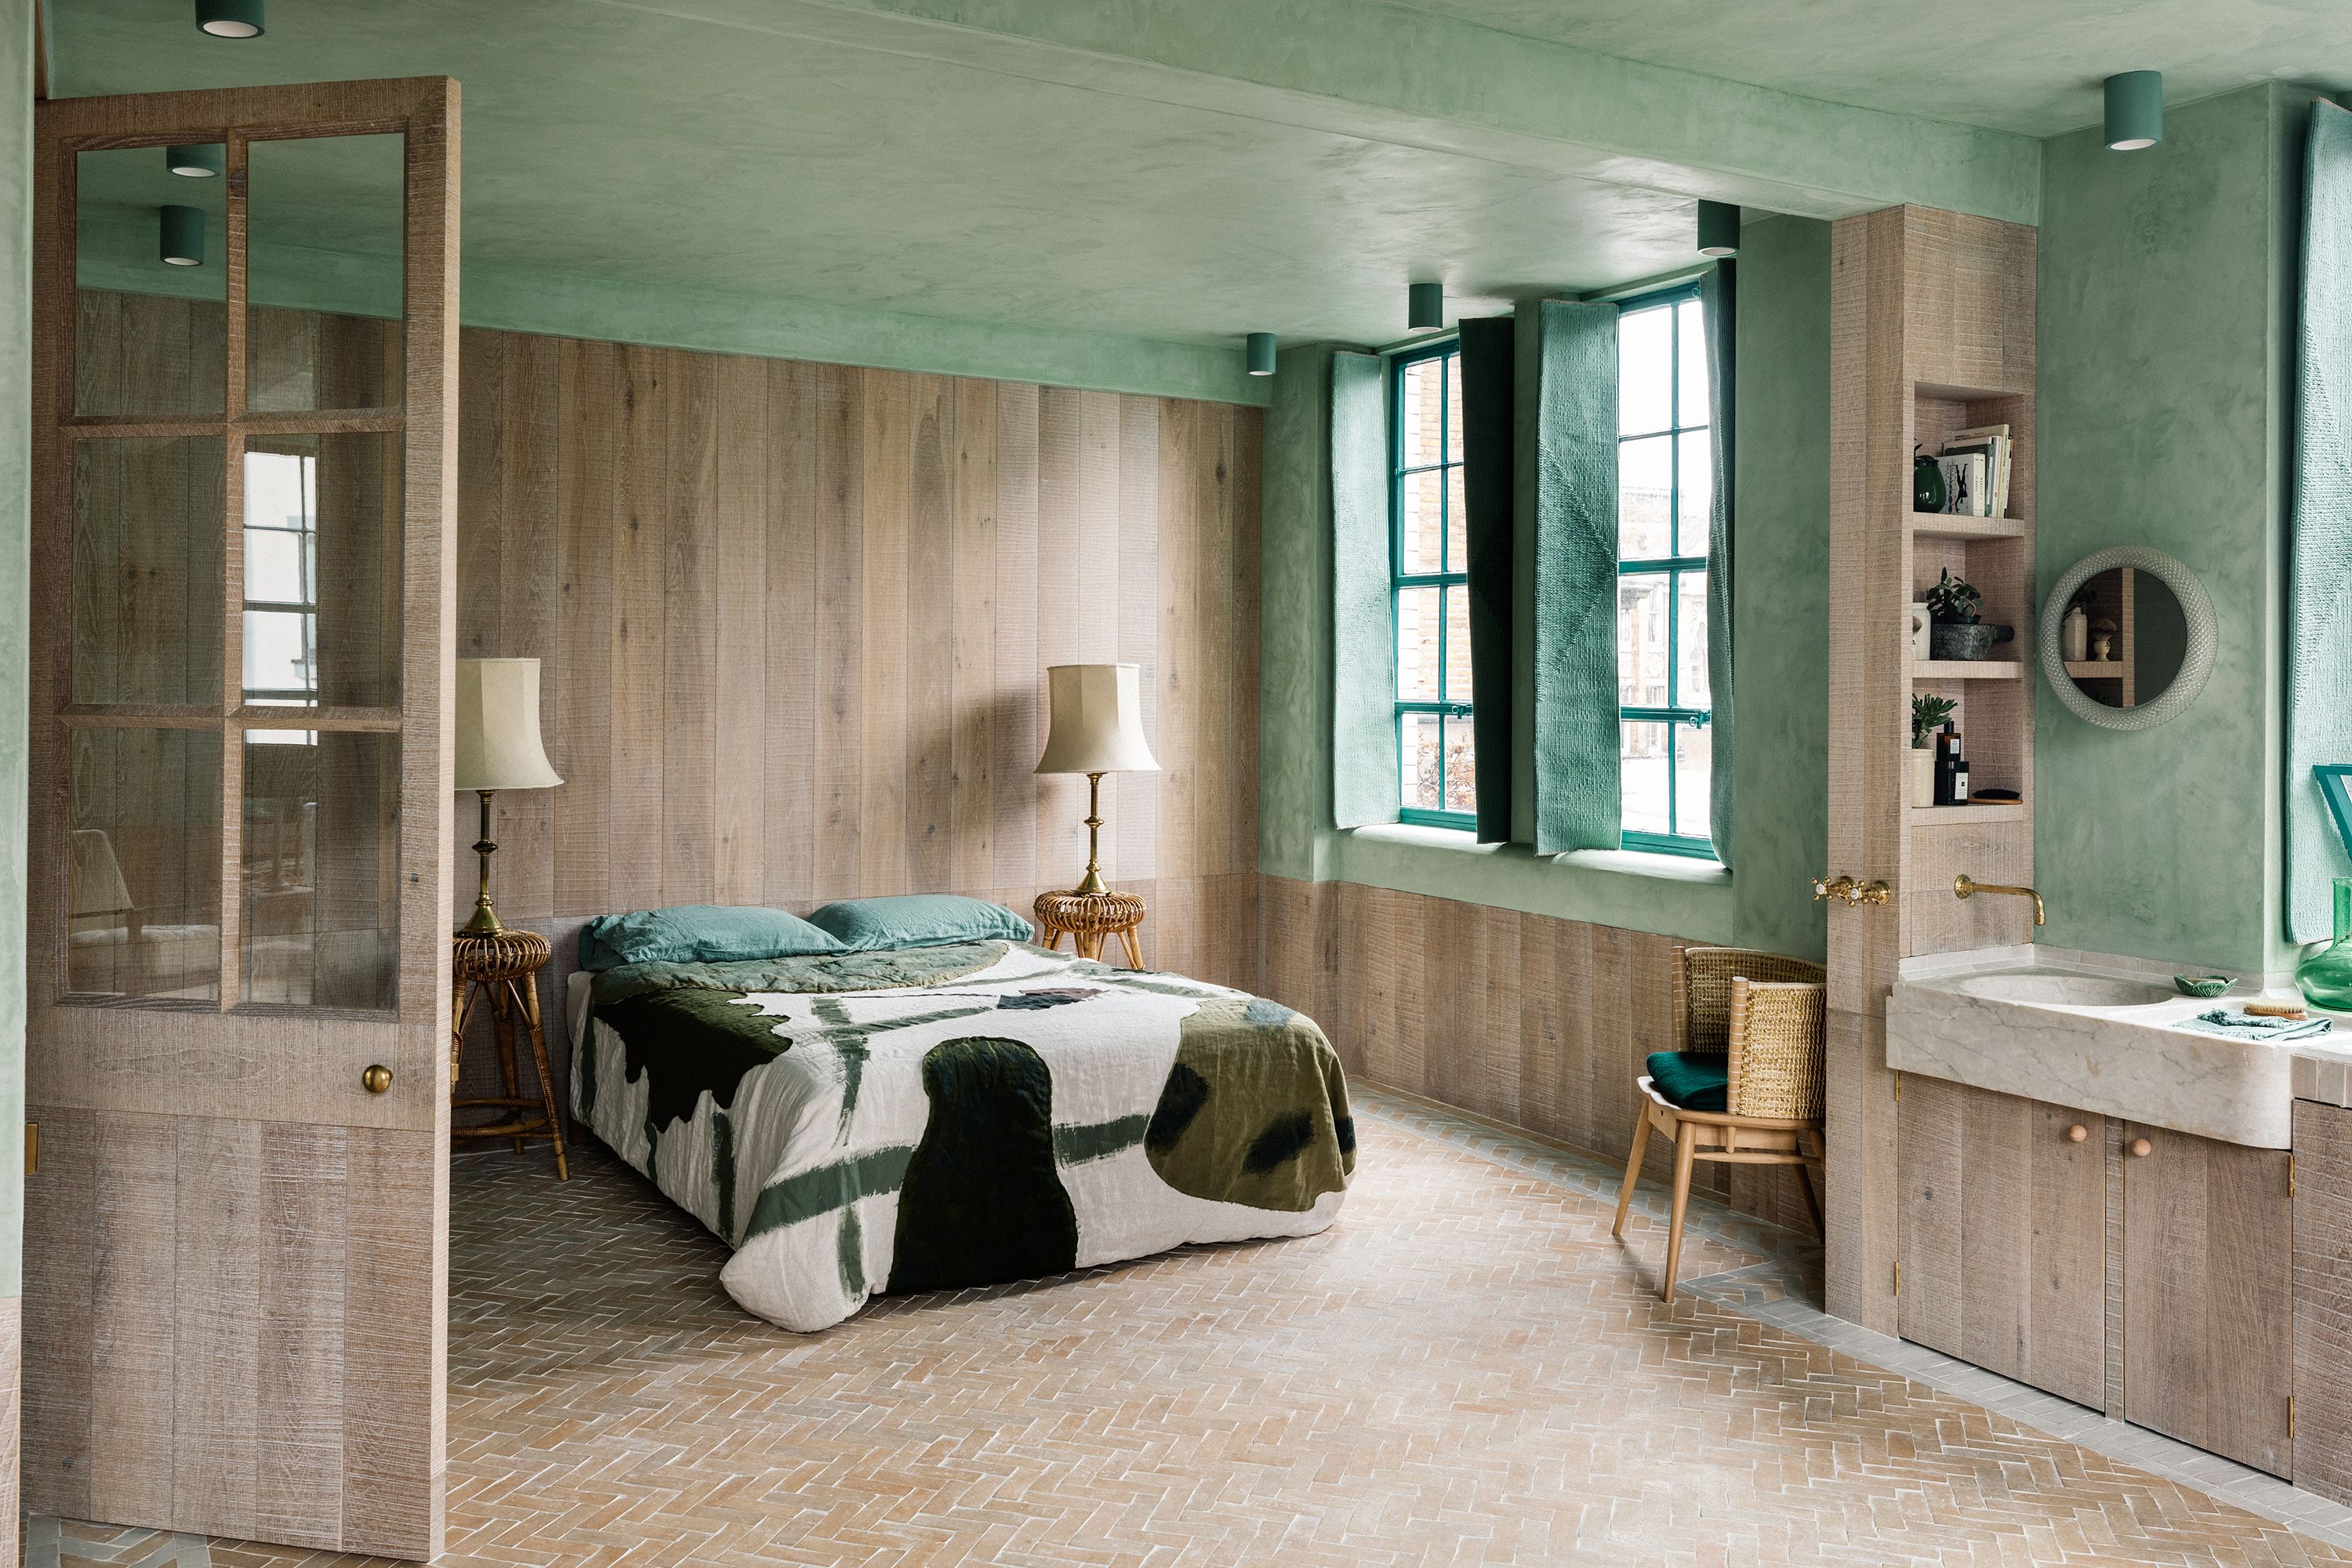 https://hips.hearstapps.com/hmg-prod/images/fabrica-convertida-en-loft-shoreditch-londres-dormitorio-madera-y-verde-1541604106.jpg